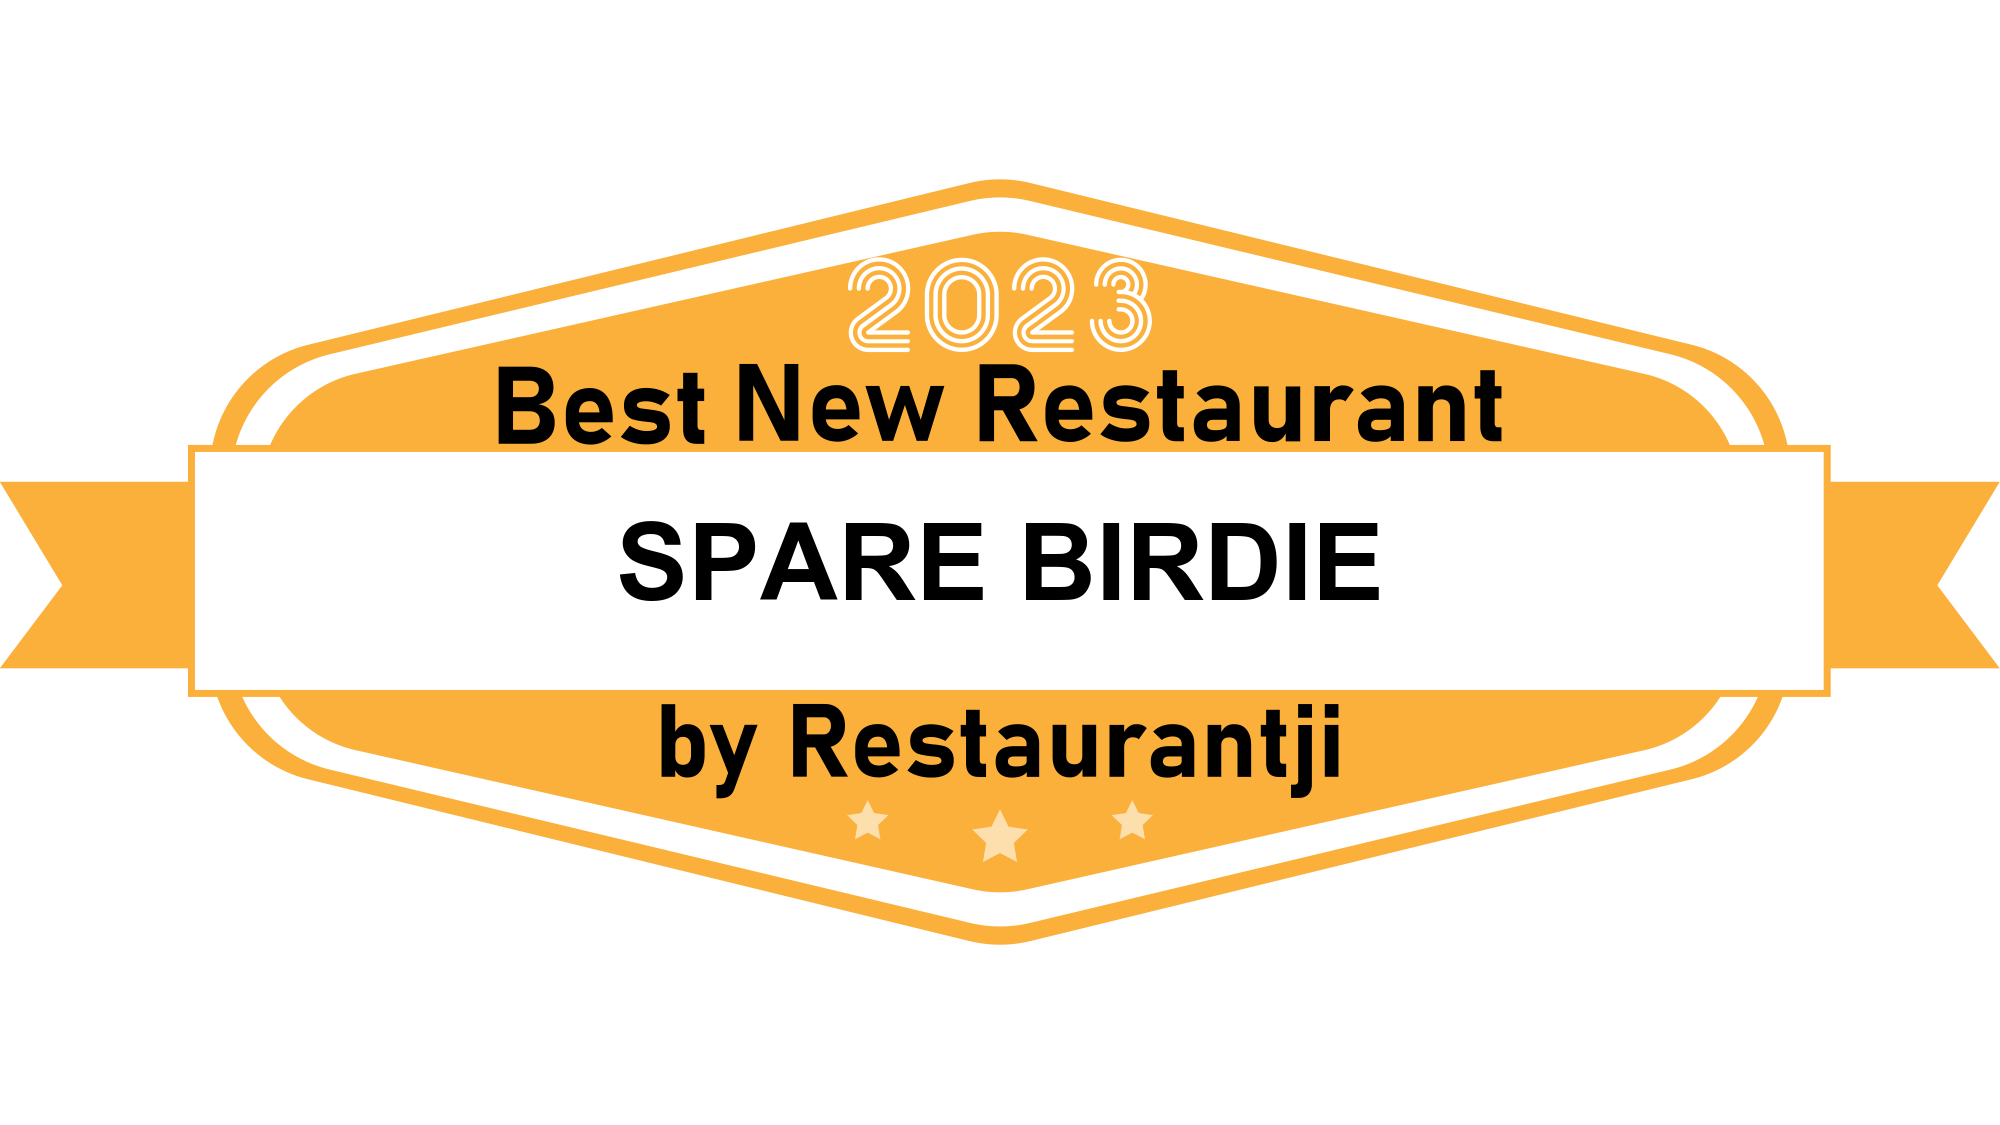 Spare Birdie is a must-visit according to Restaurantji